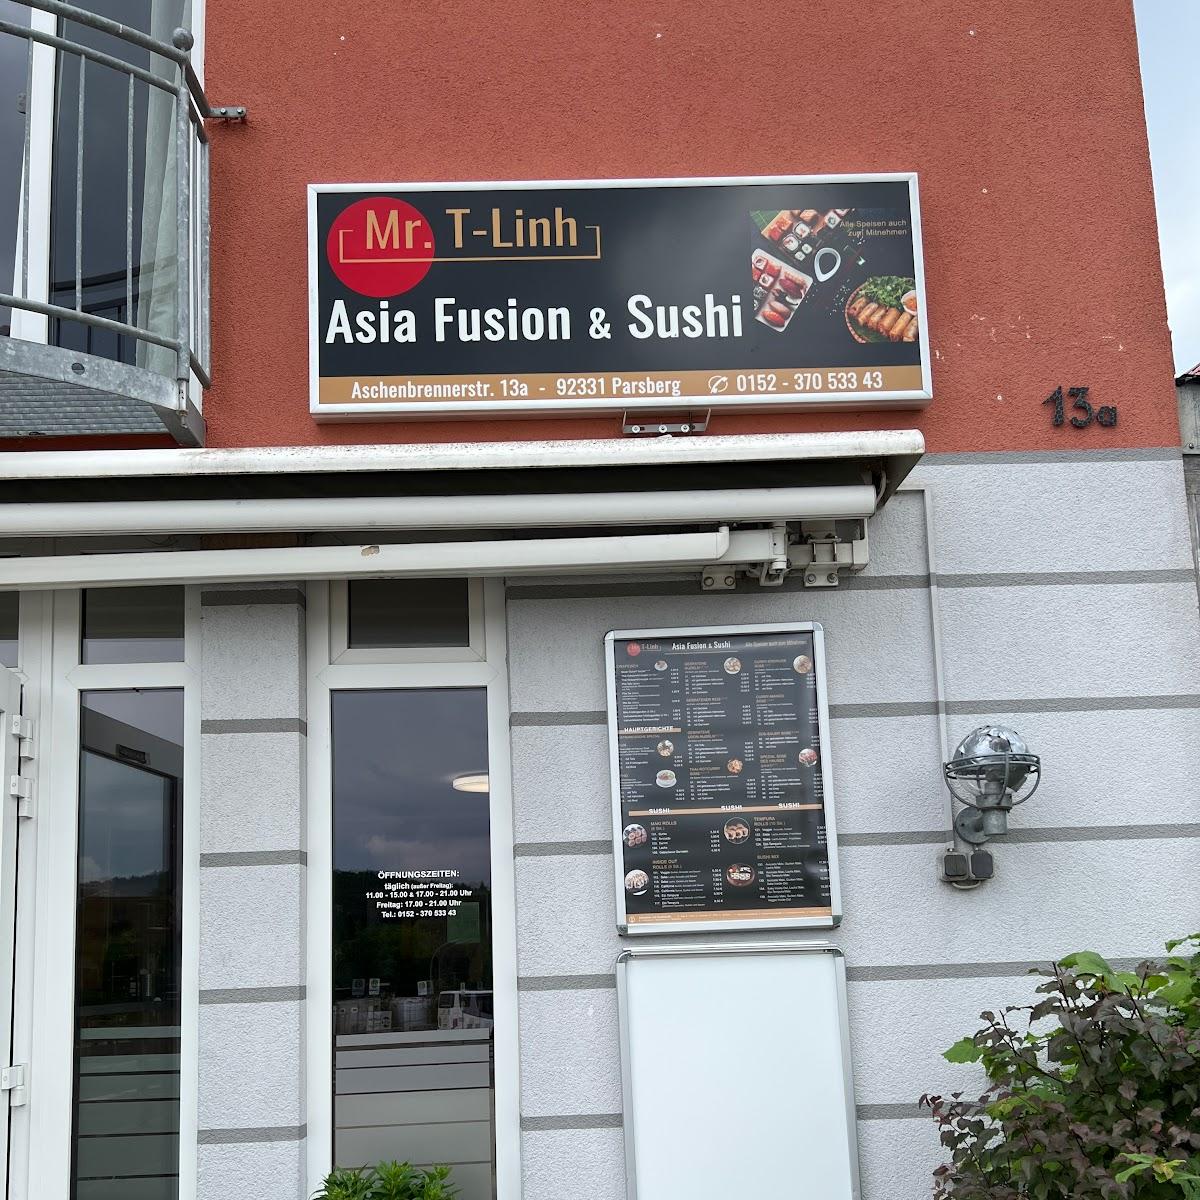 Restaurant "Asia Bistro- Mr. T- Linh (Asia Fusion & Sushi)" in Parsberg